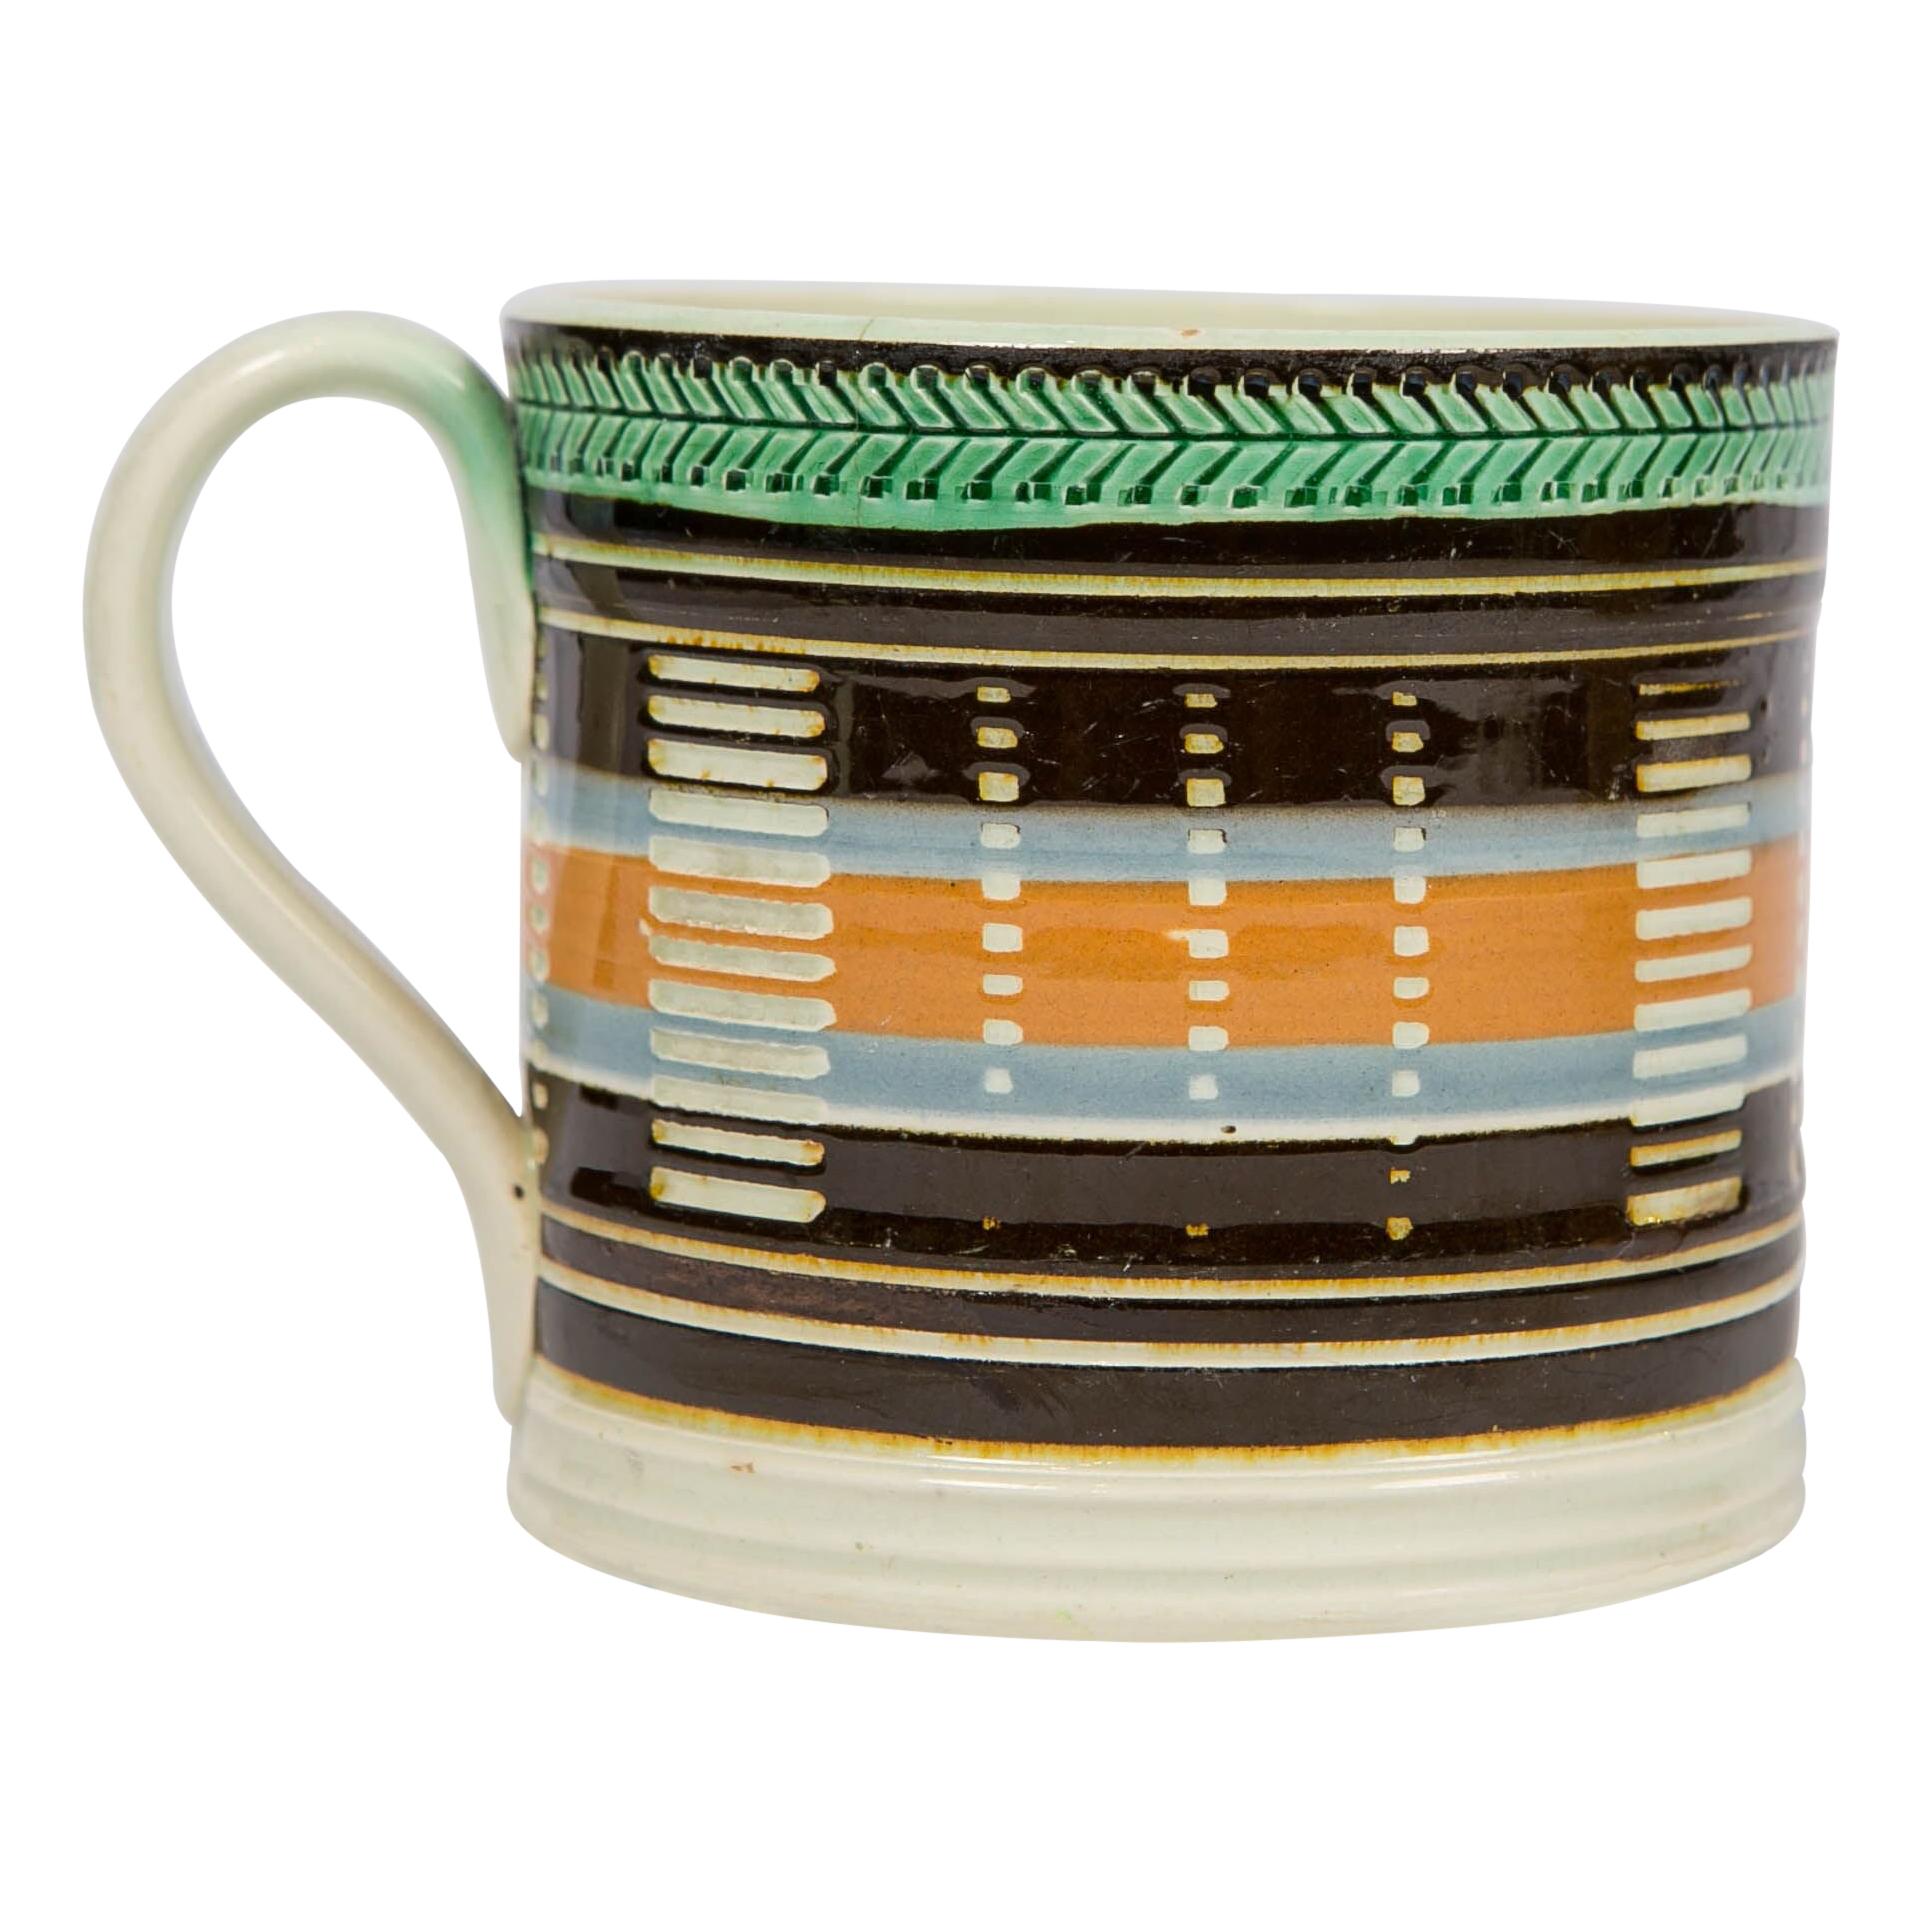 Mochaware Mug with Slip Decoration Made in England, circa 1820